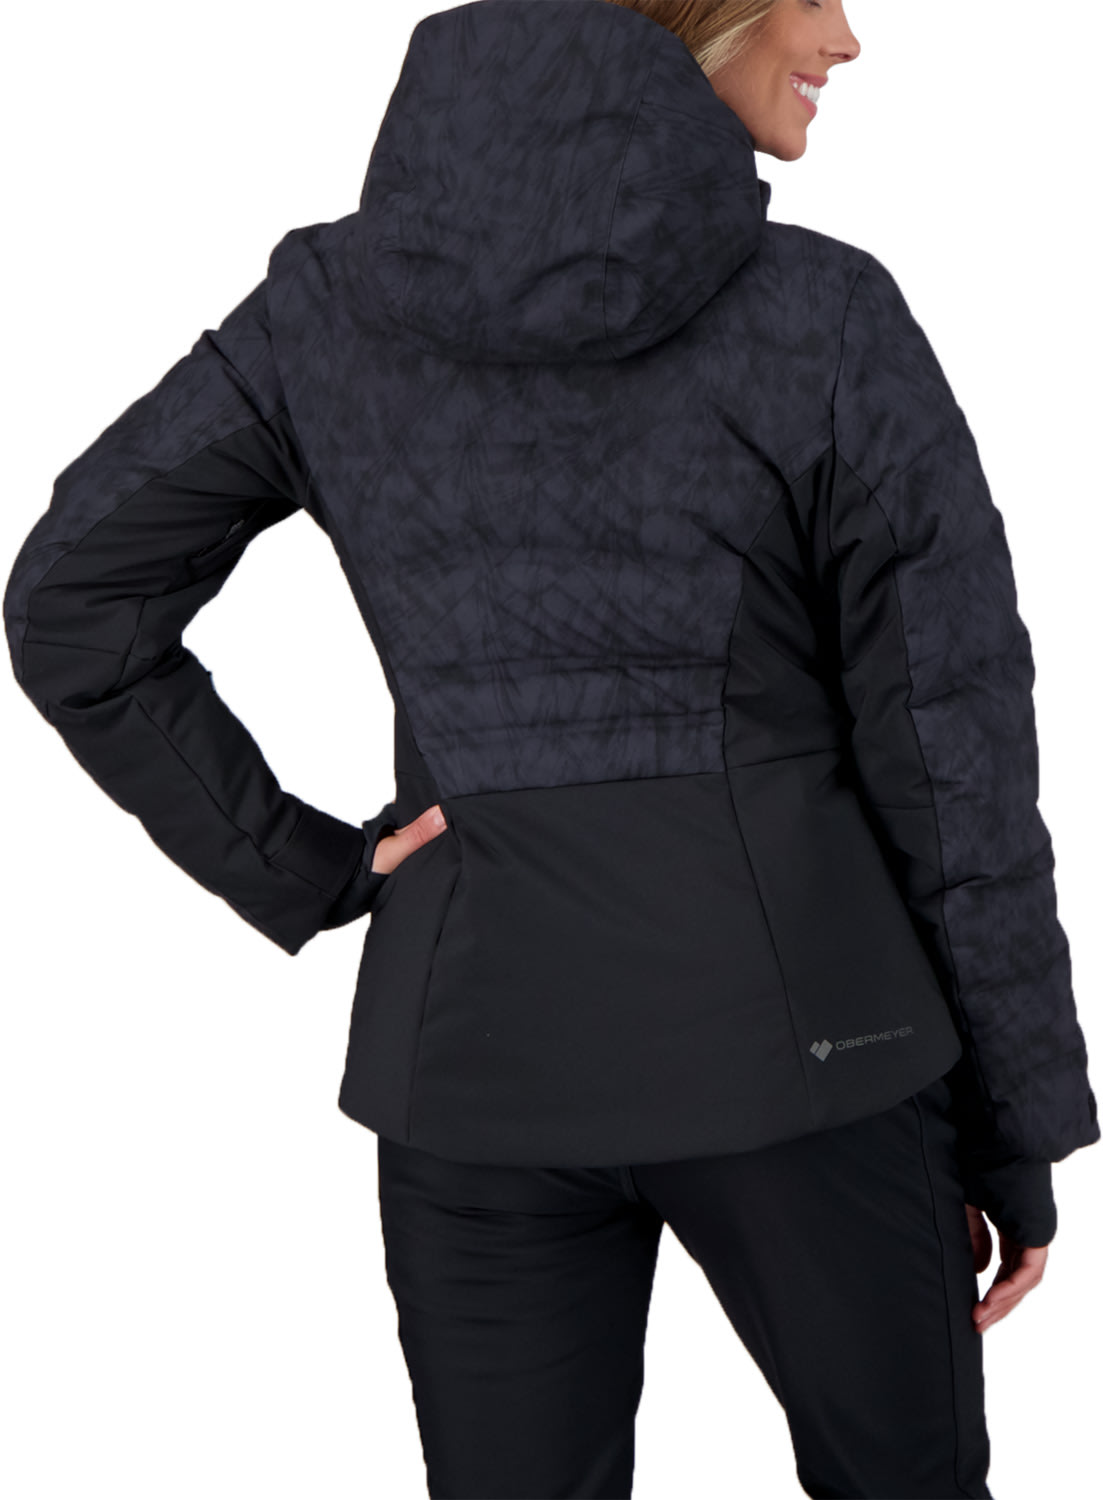 Obermeyer Cosima Down Ski Jacket - Womens Shop an intelligent